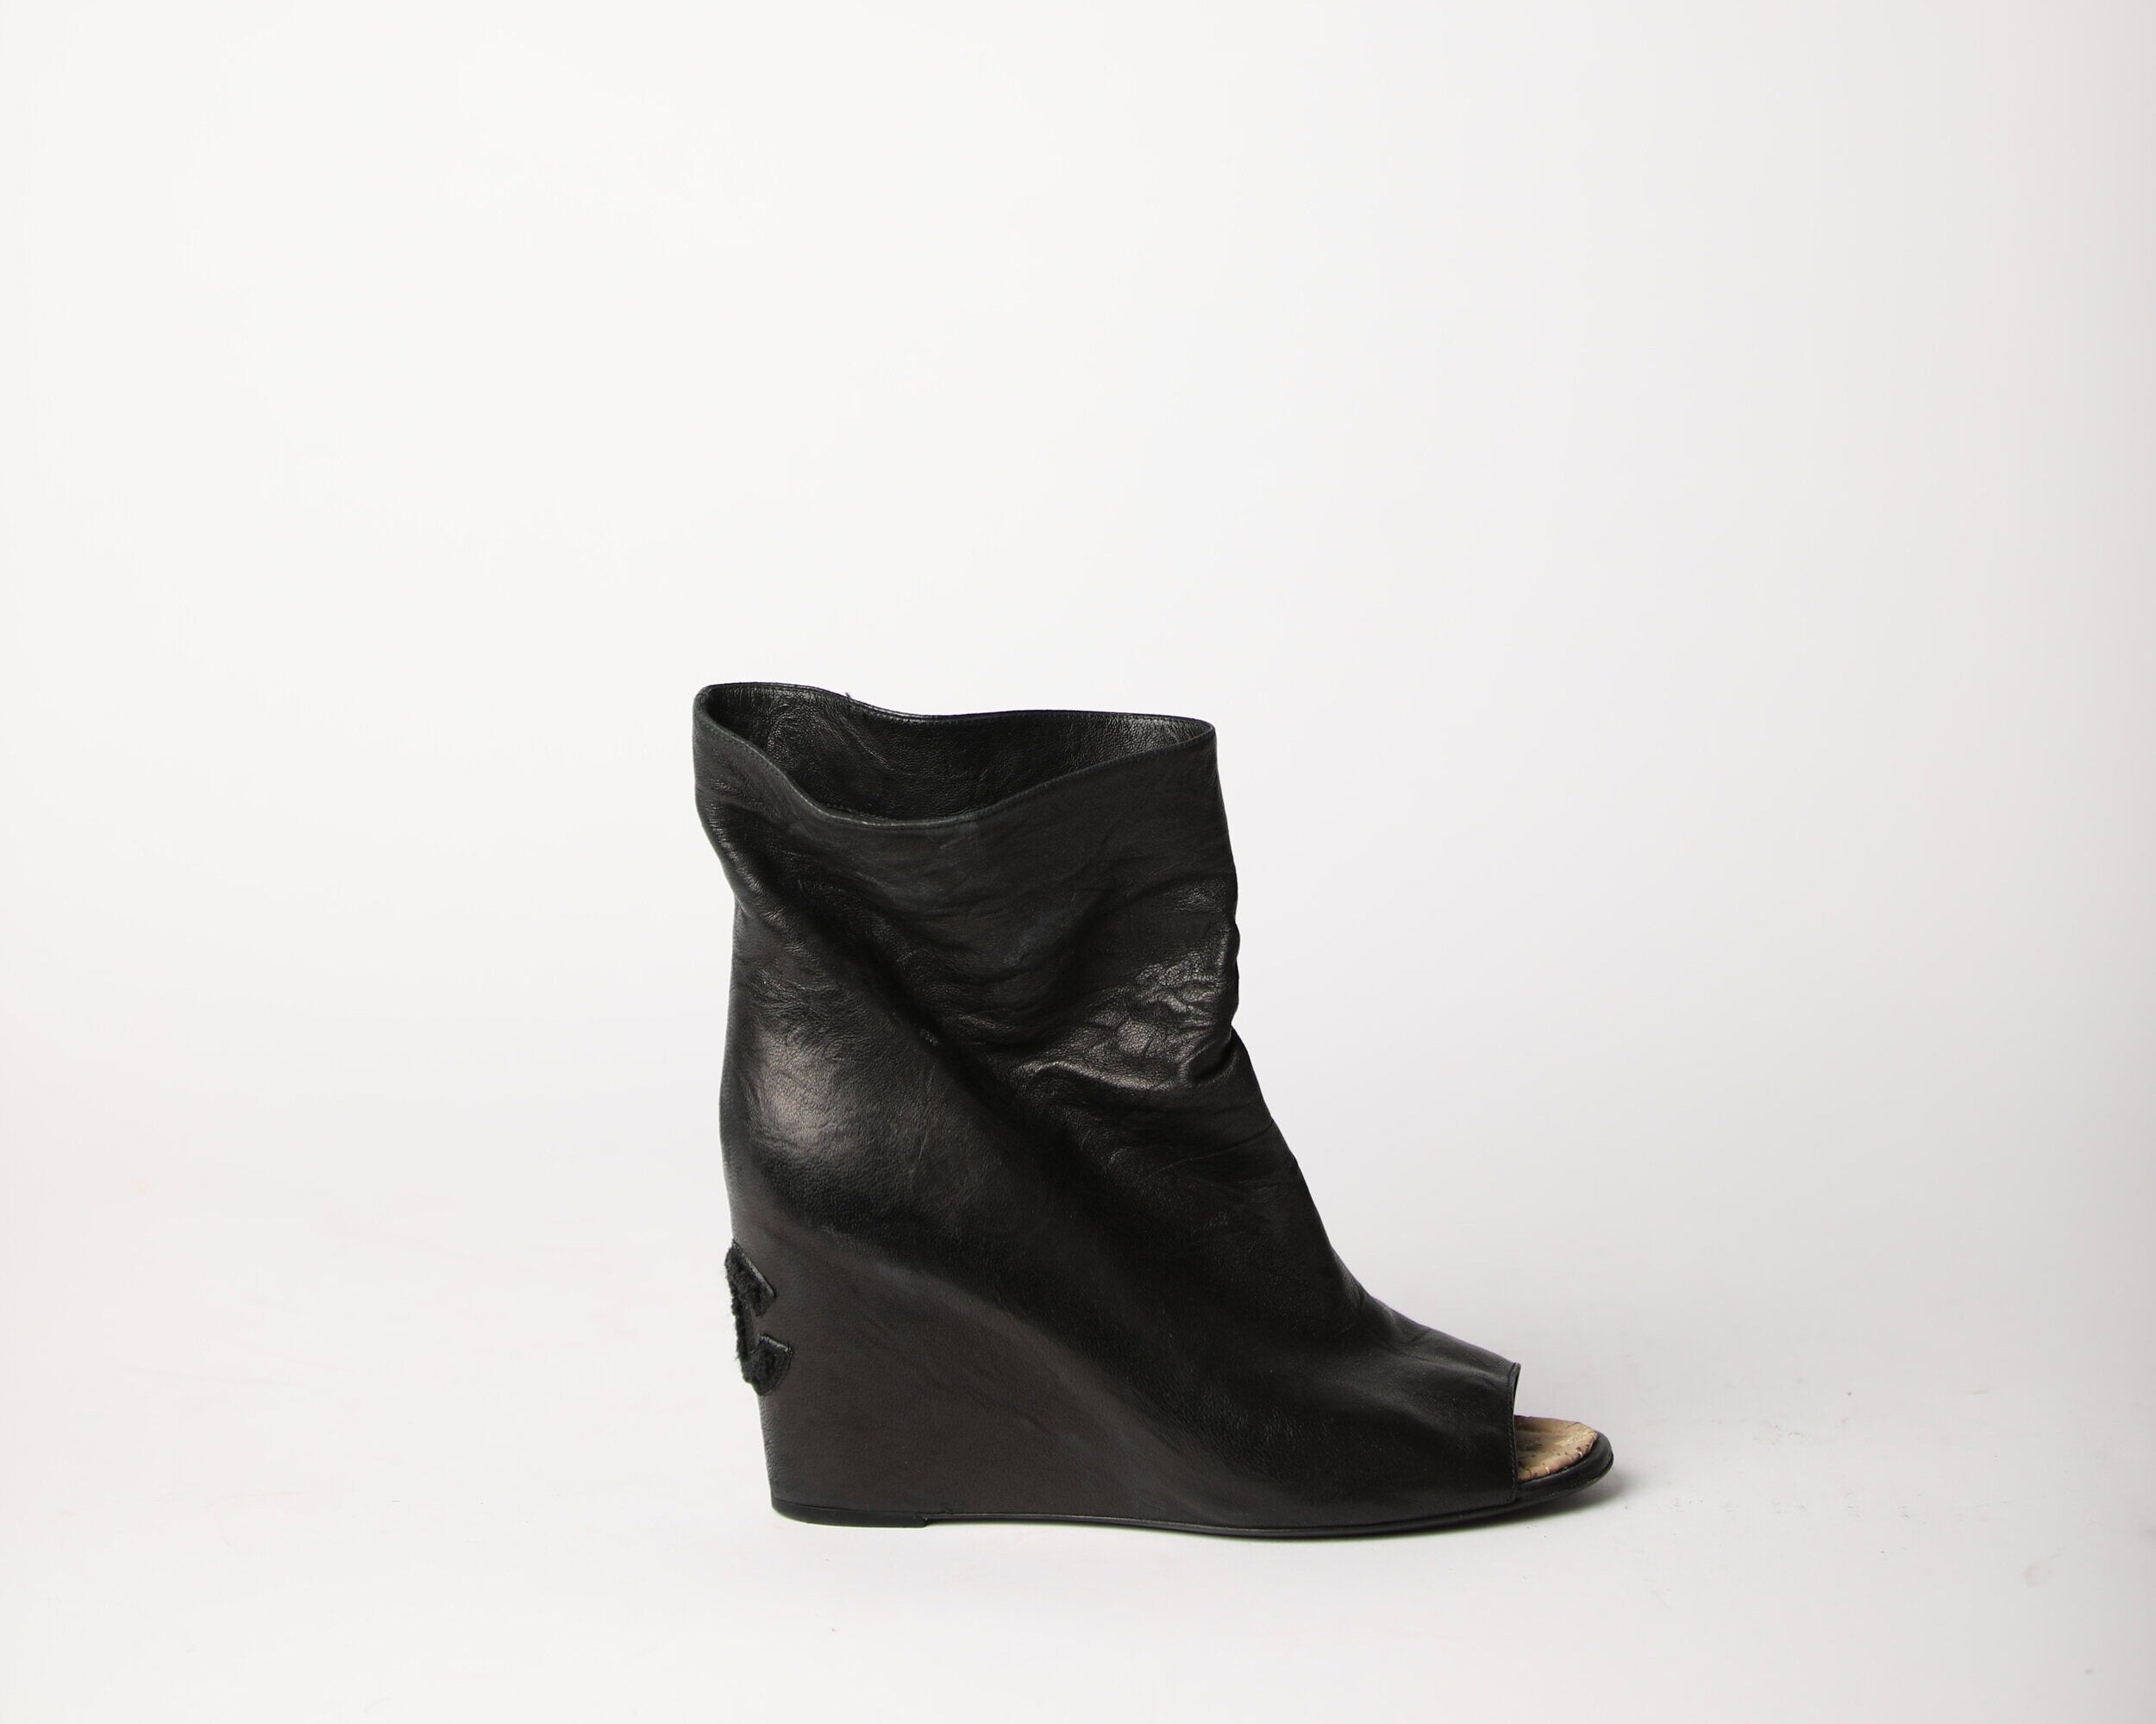 Chanel Boots Black Wedge Sole 36.5 Box Size Women US6.5 box